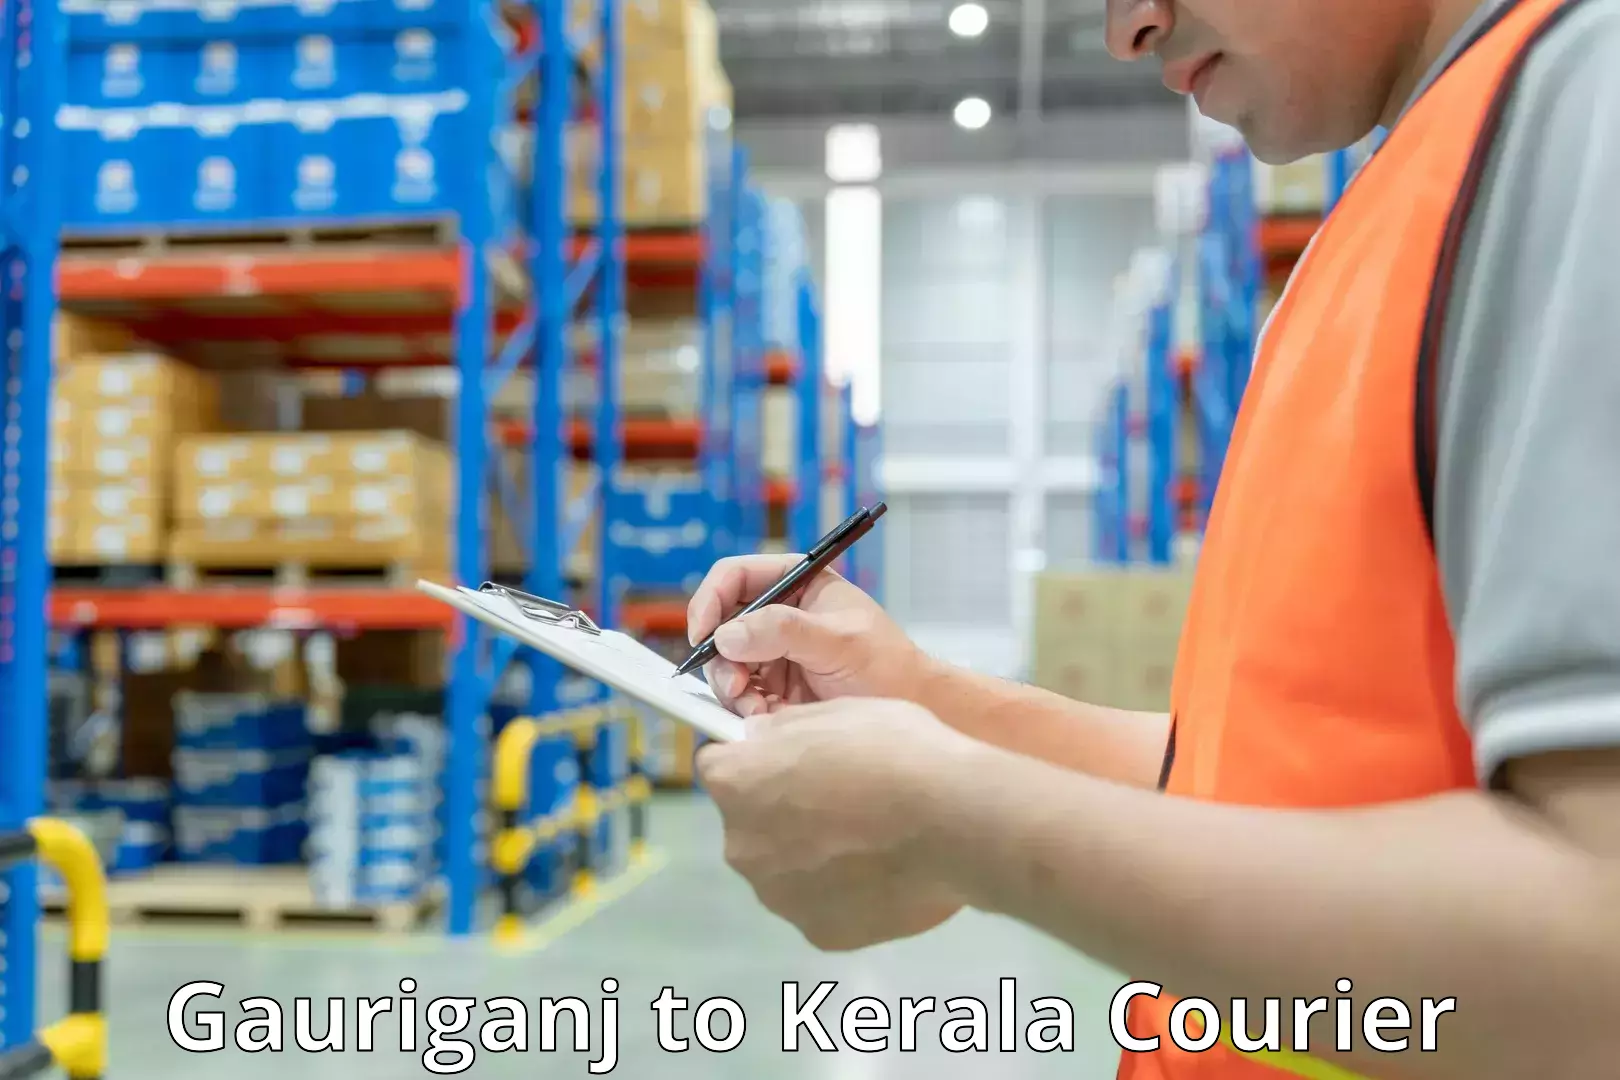 Luggage delivery app Gauriganj to Kerala